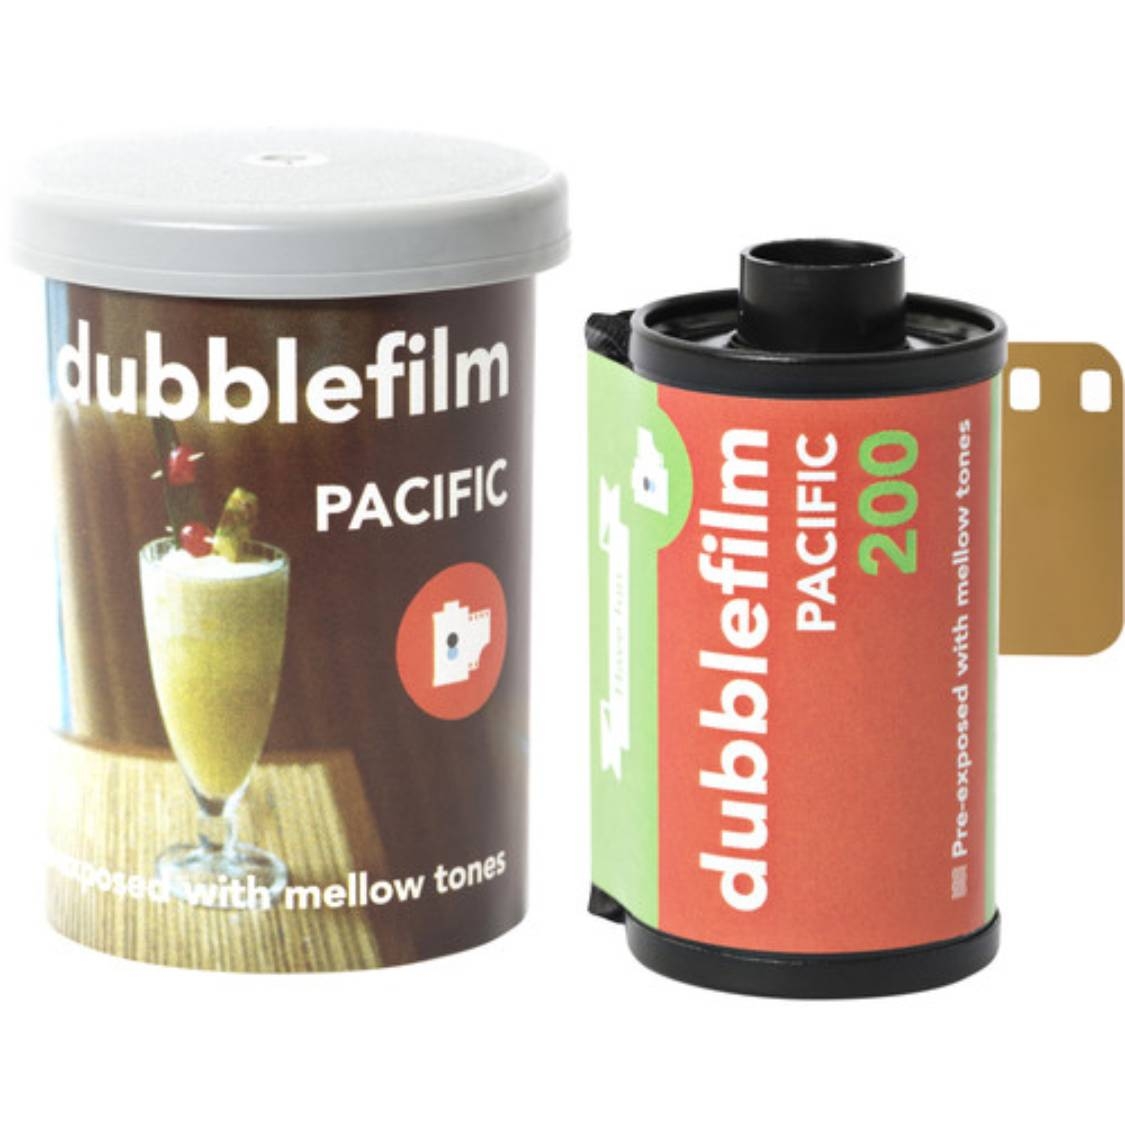 Dubble film Pacific 200 Color Negative Film (35mm Roll Film, 36 Exposures)